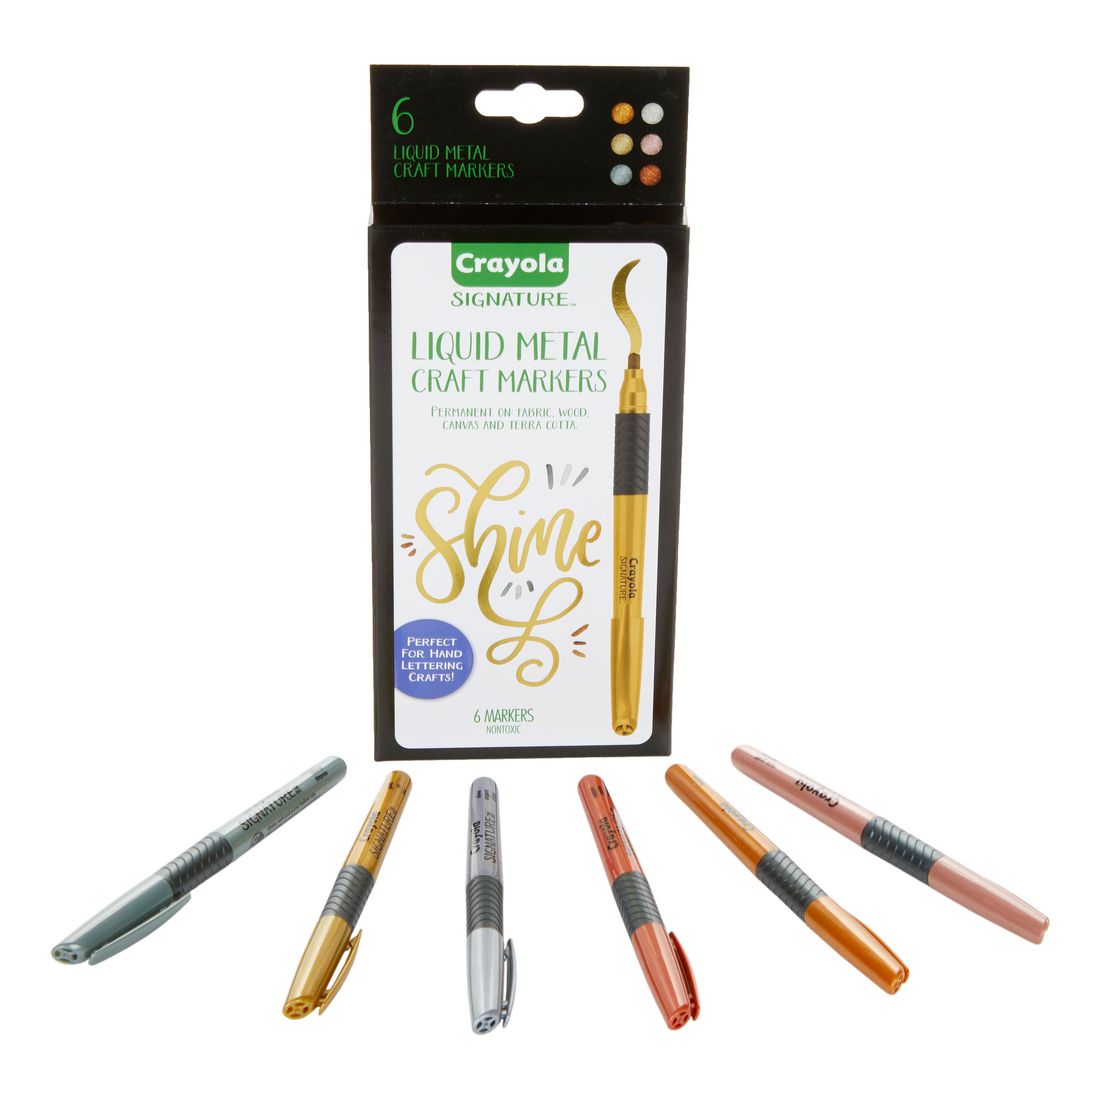 Crayola Signature Liquid Metal Craft Markers (Set Of 6)